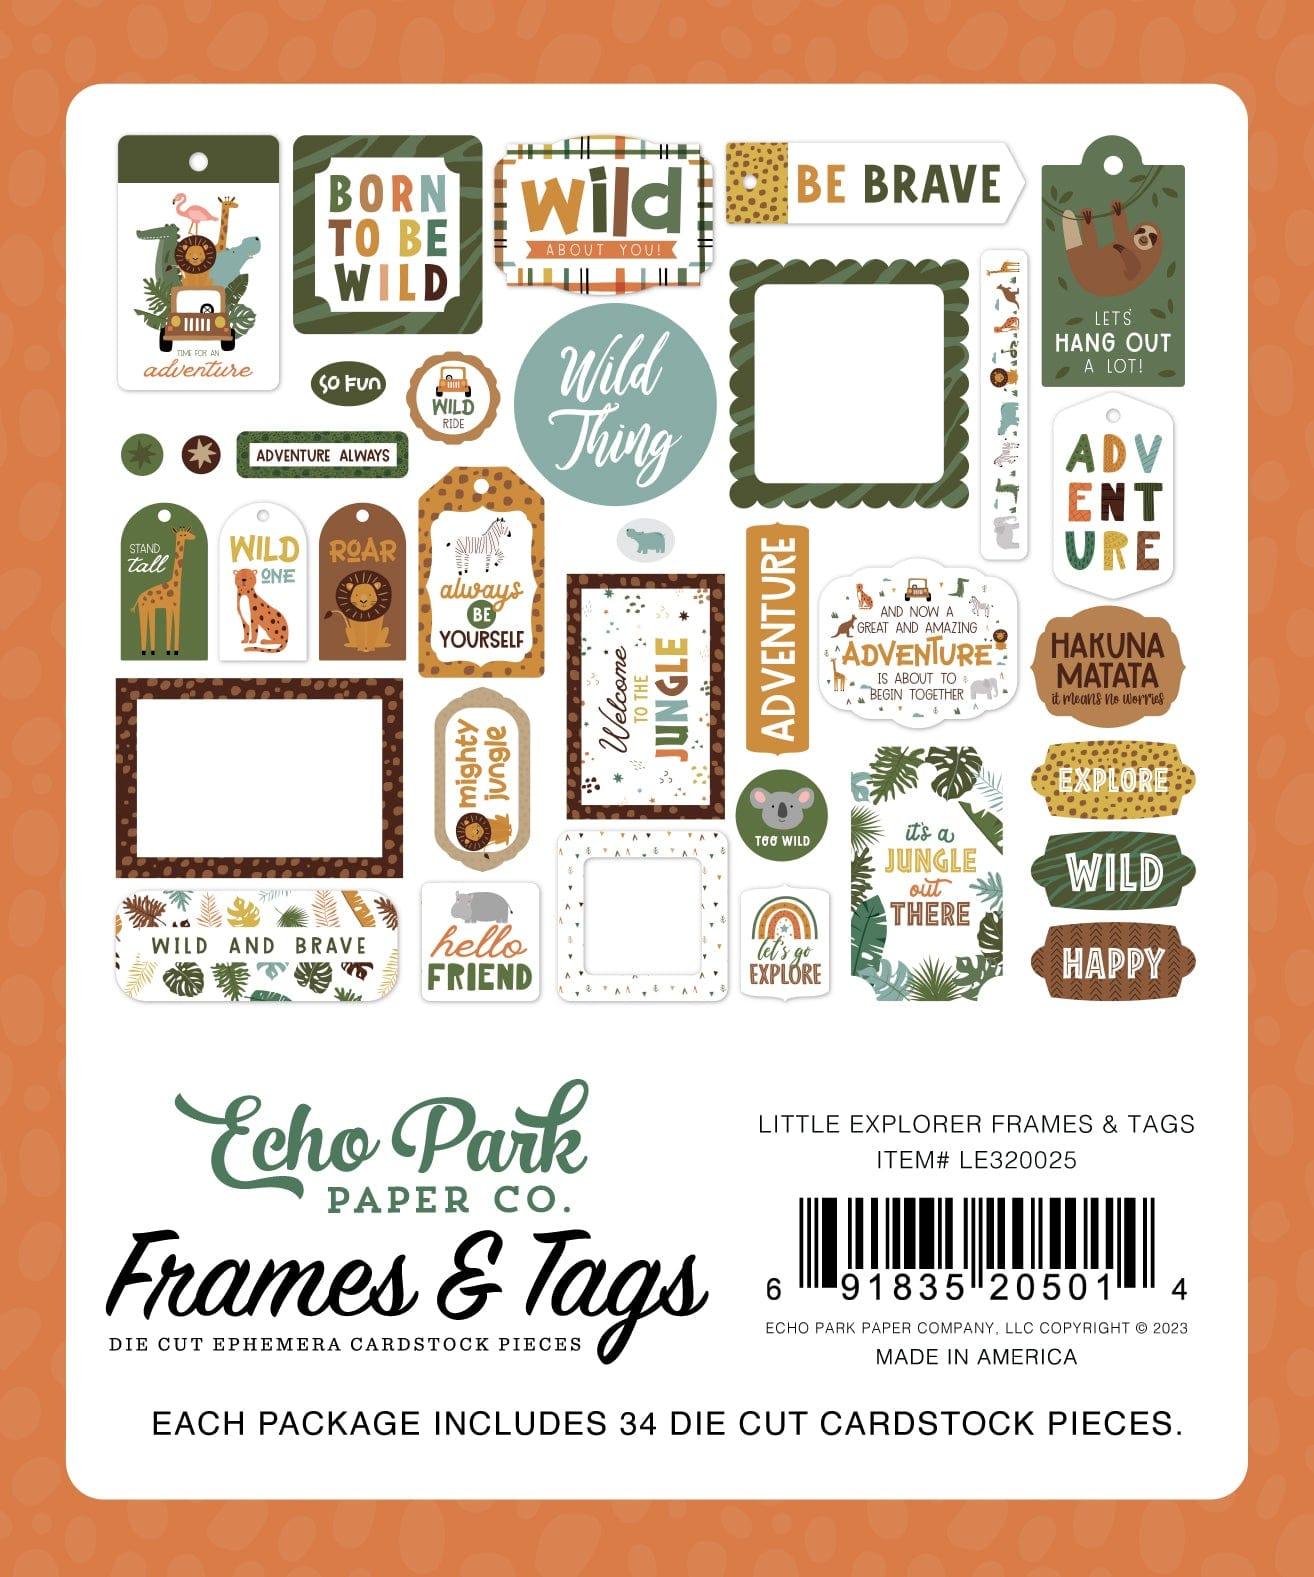 Little Explorer Collection 5 x 5 Scrapbook Frames & Tags by Echo Park Paper - Scrapbook Supply Companies